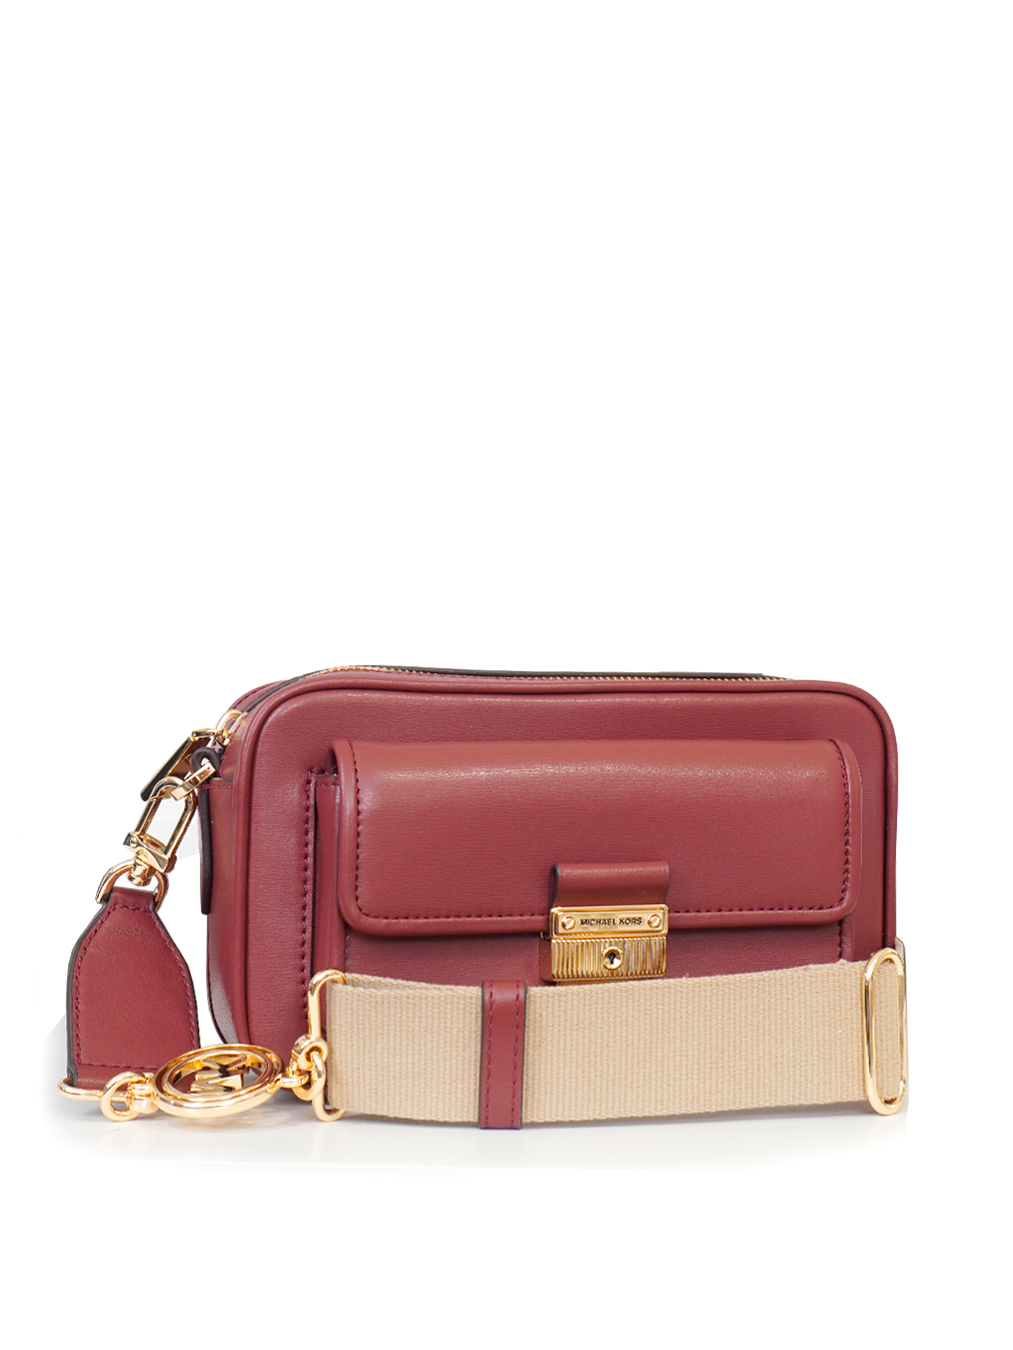 Michael Kors Mercer Leather Wallet - Mulberry MK32S7GM9E9L-666 191262375033  - Handbags - Jomashop